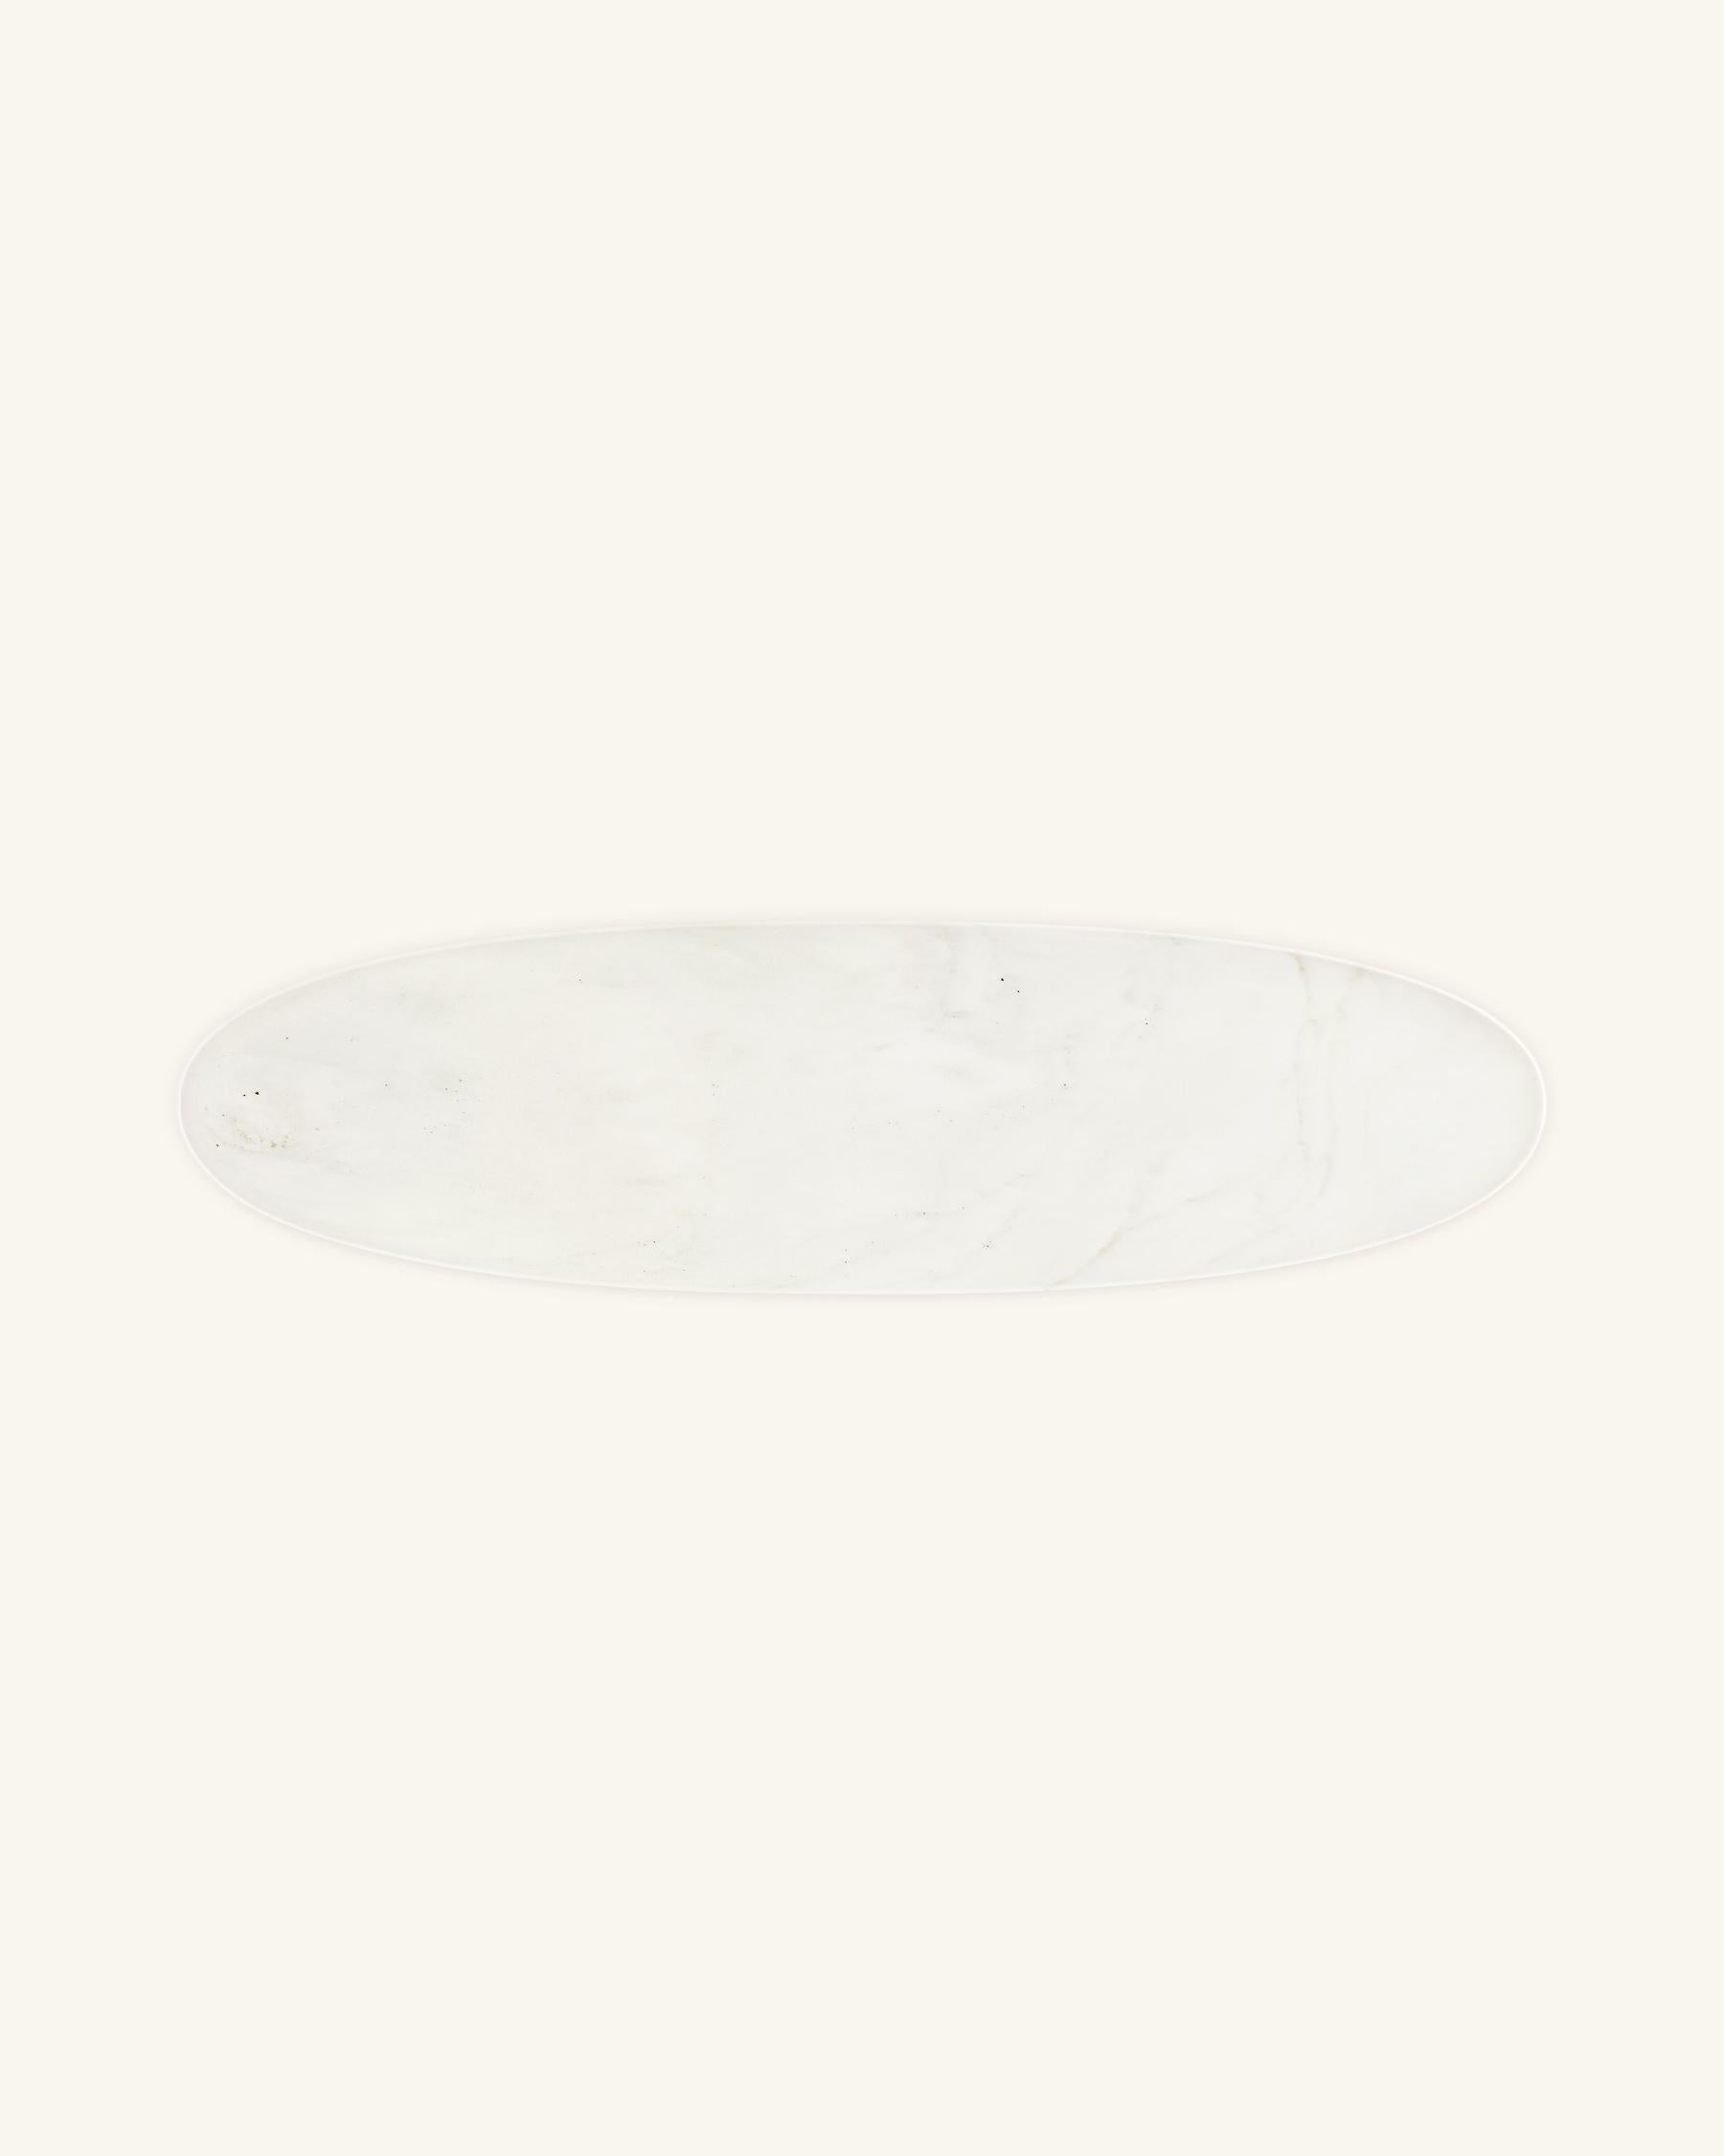 Contemporary Cremo Delicato Marble Sepia Trey by Homefolks For Sale 2